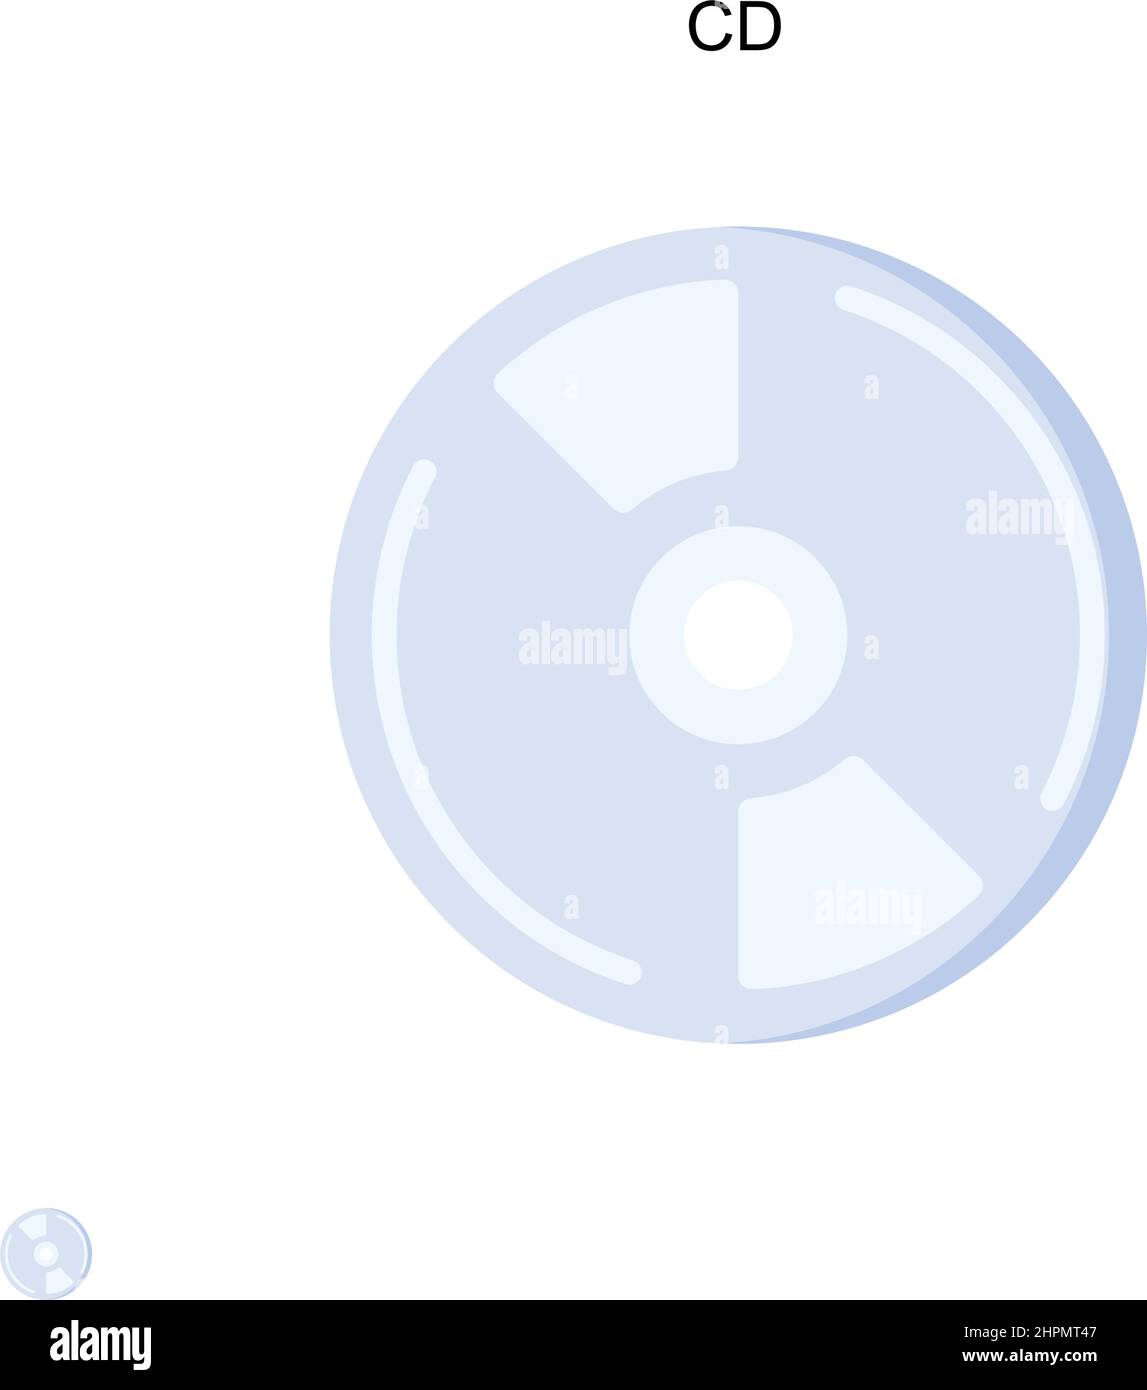 Einfaches CD-Vektorsymbol. Illustration Symbol Design-Vorlage für Web mobile UI-Element. Stock Vektor